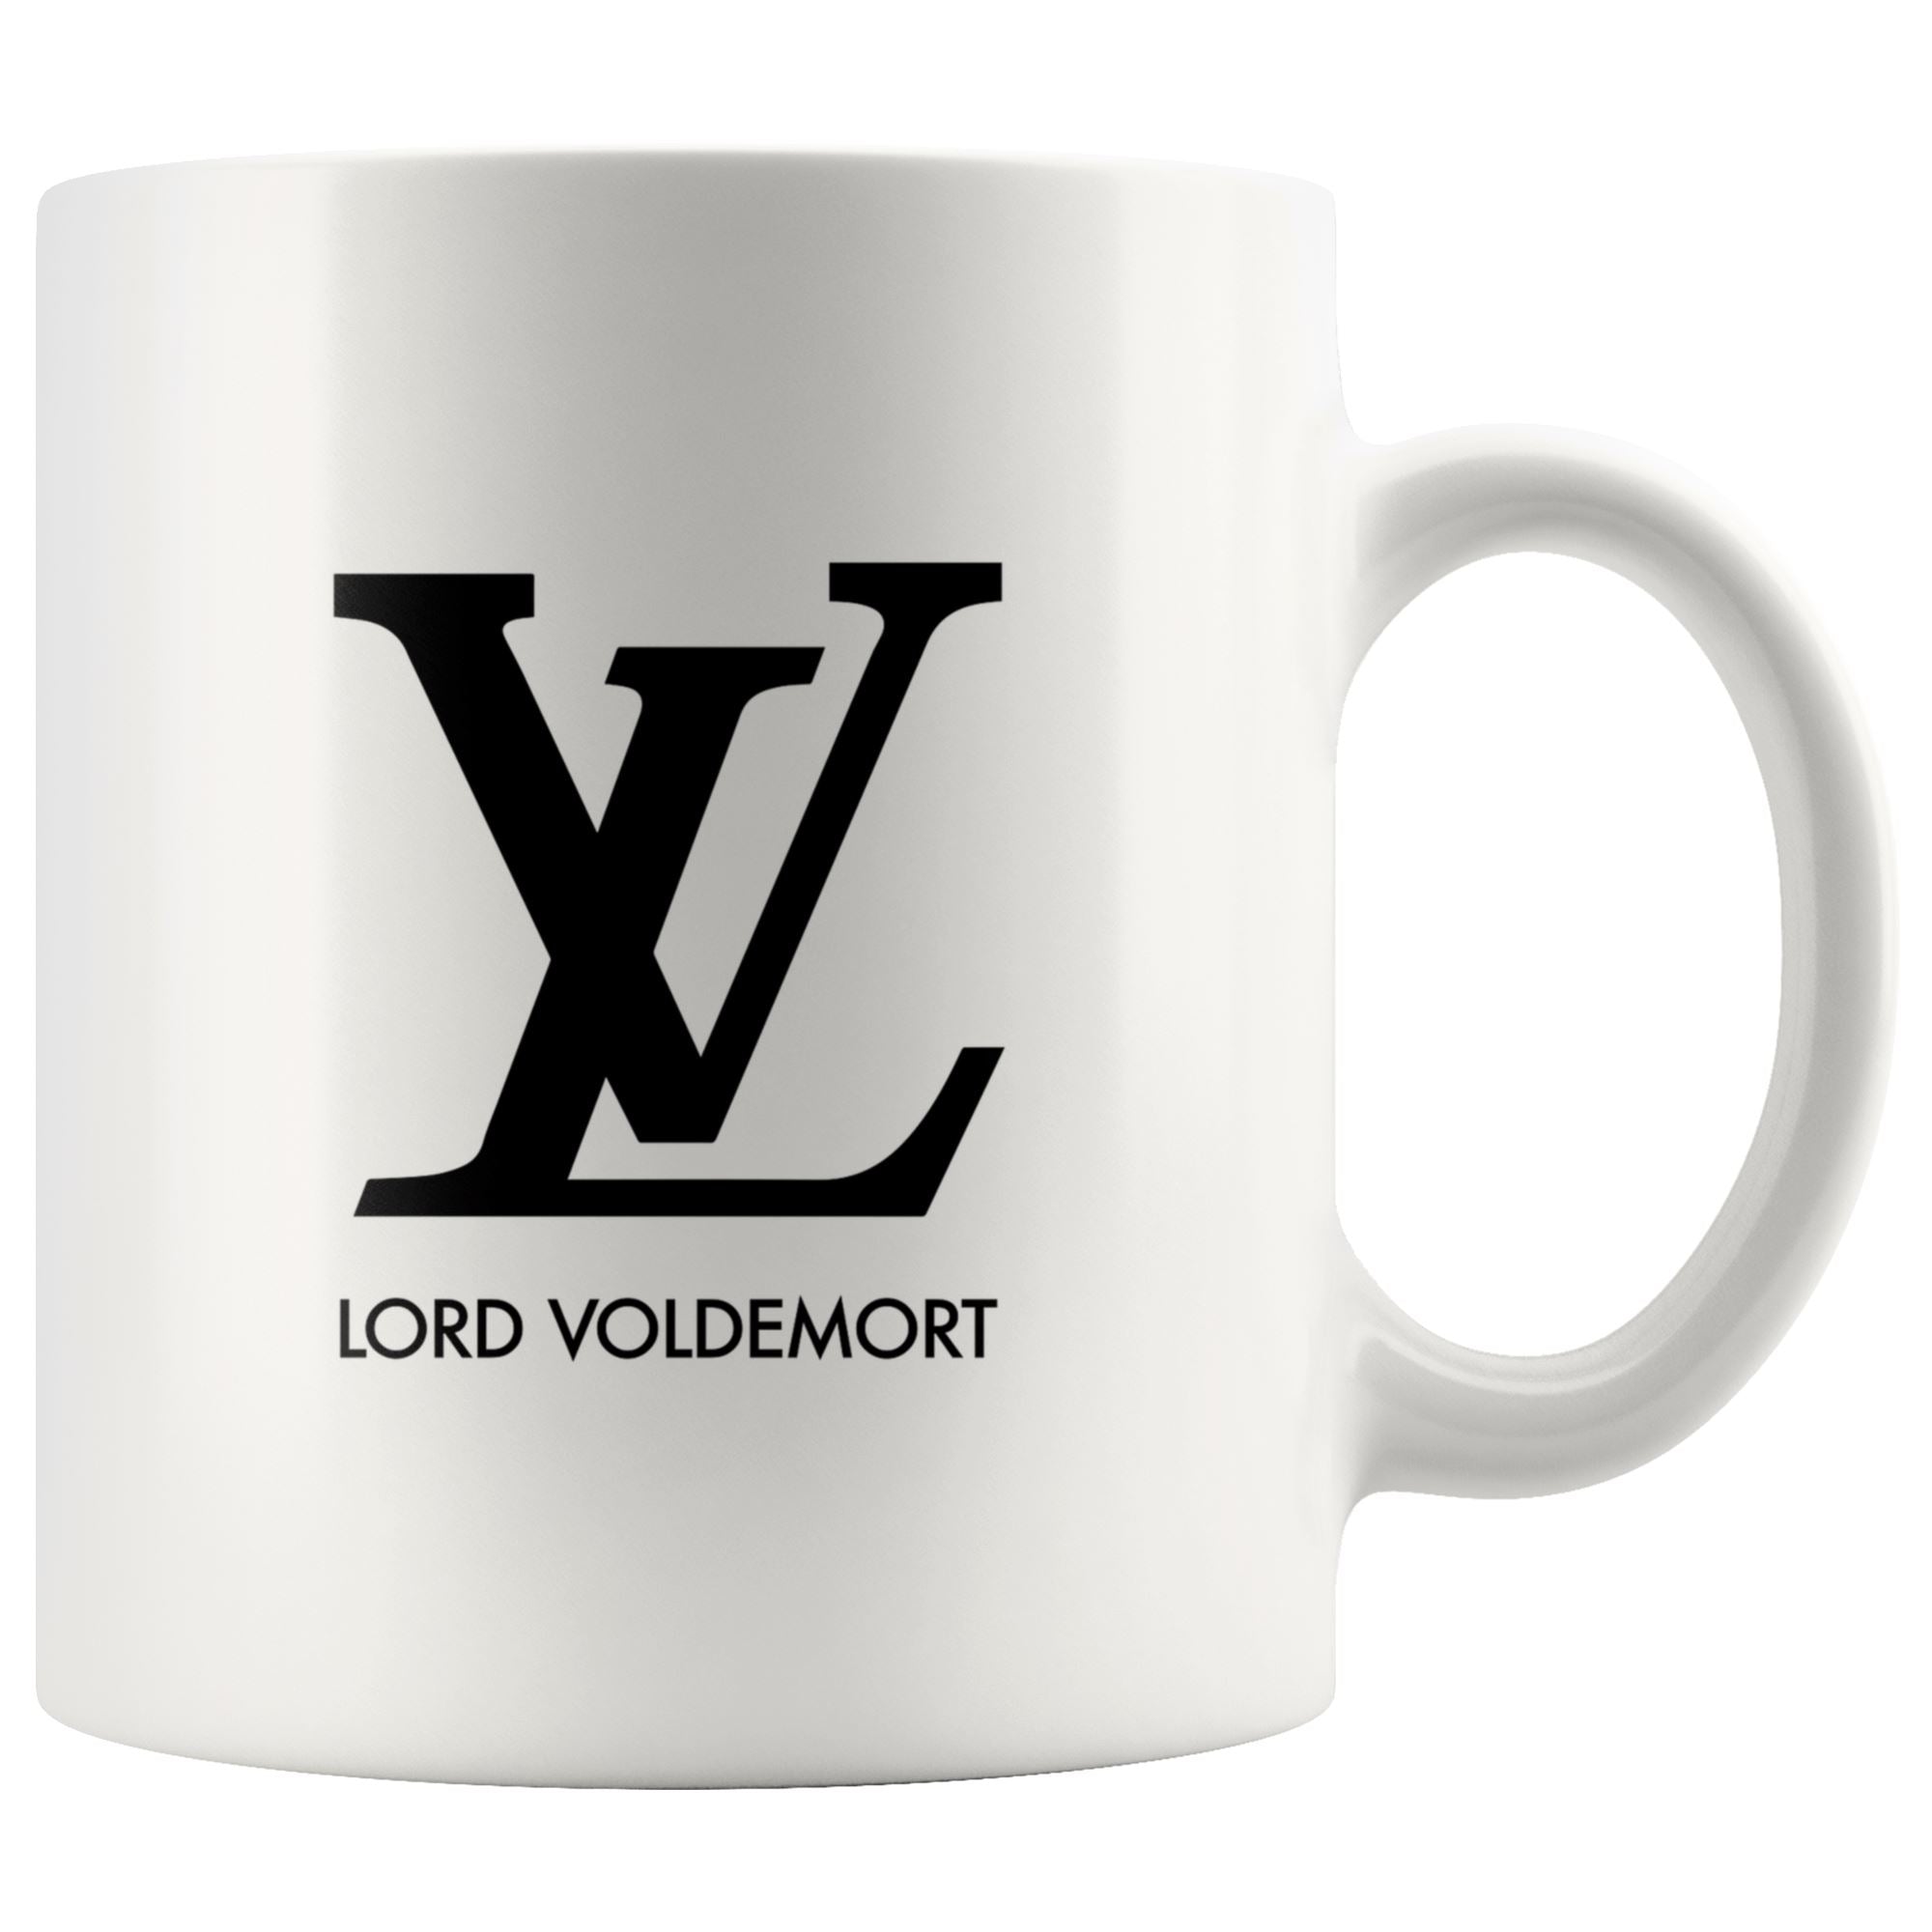 Lord Voldemort Mug Drinkware teelaunch 11oz Mug 